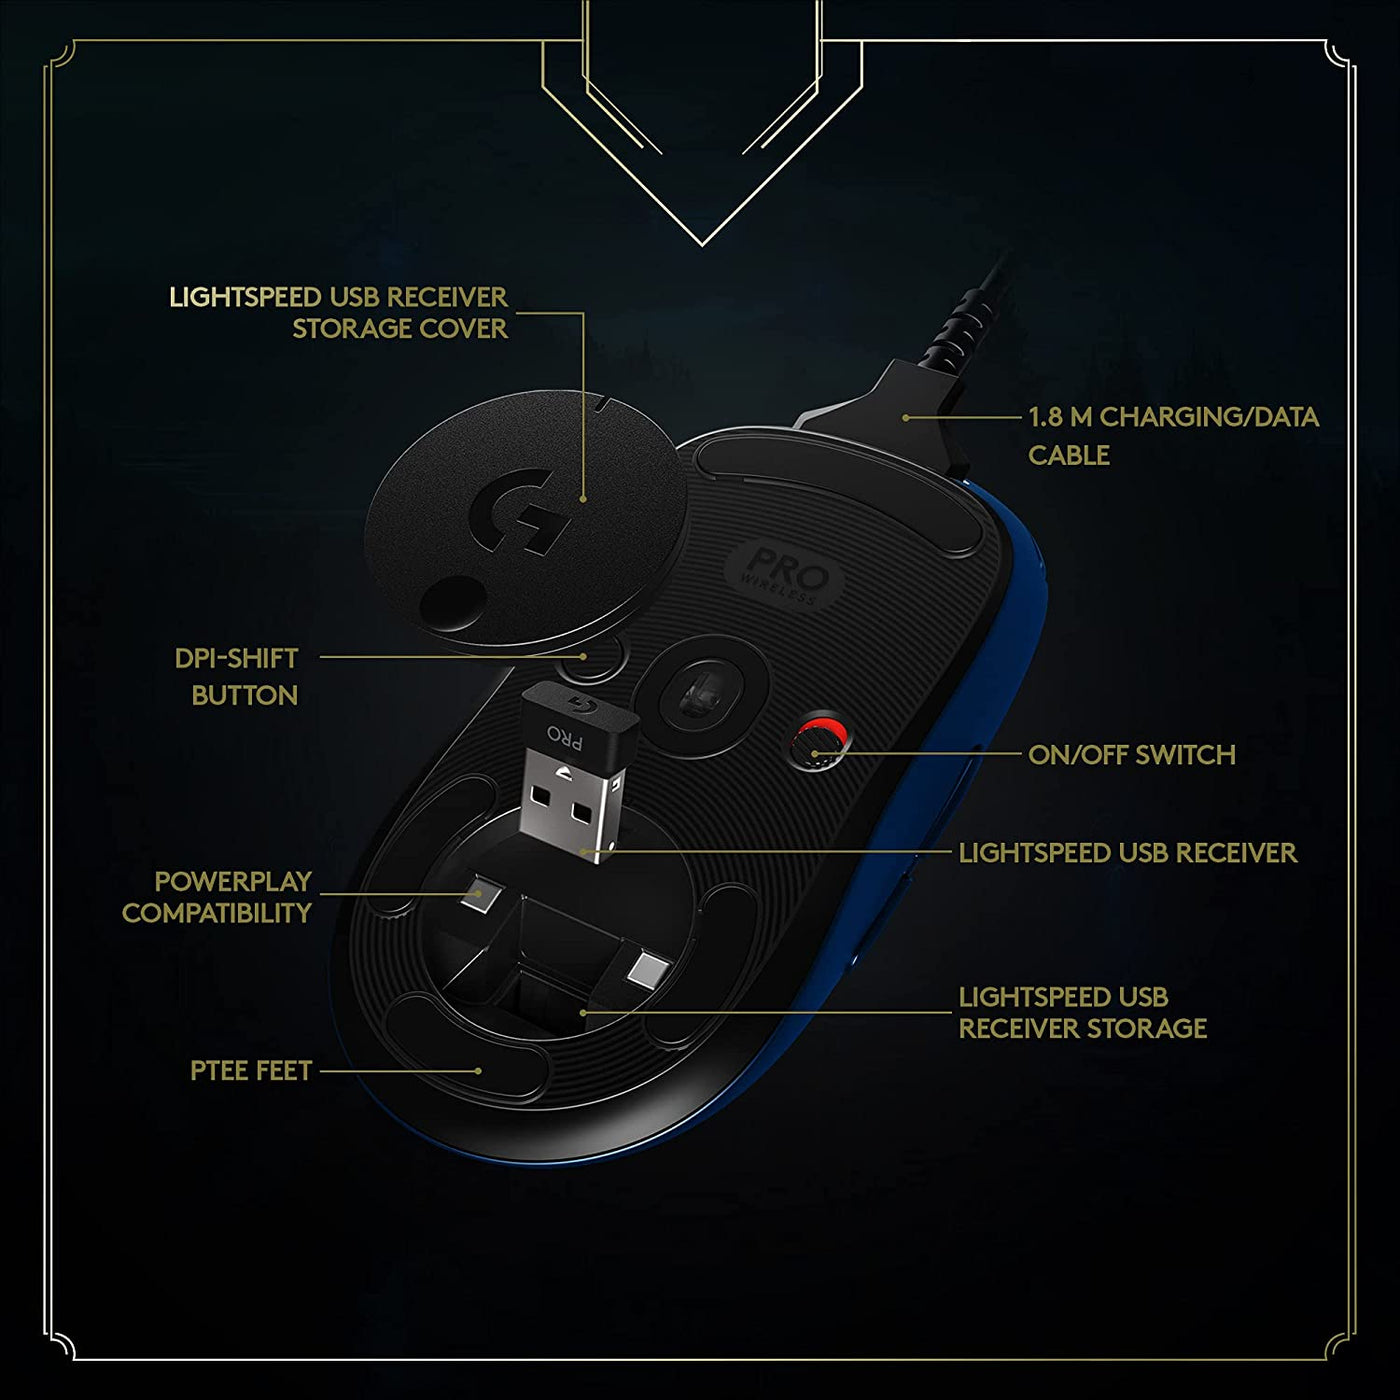 Mouse Gamer Logitech G Pro Wireless Edición League of Legends